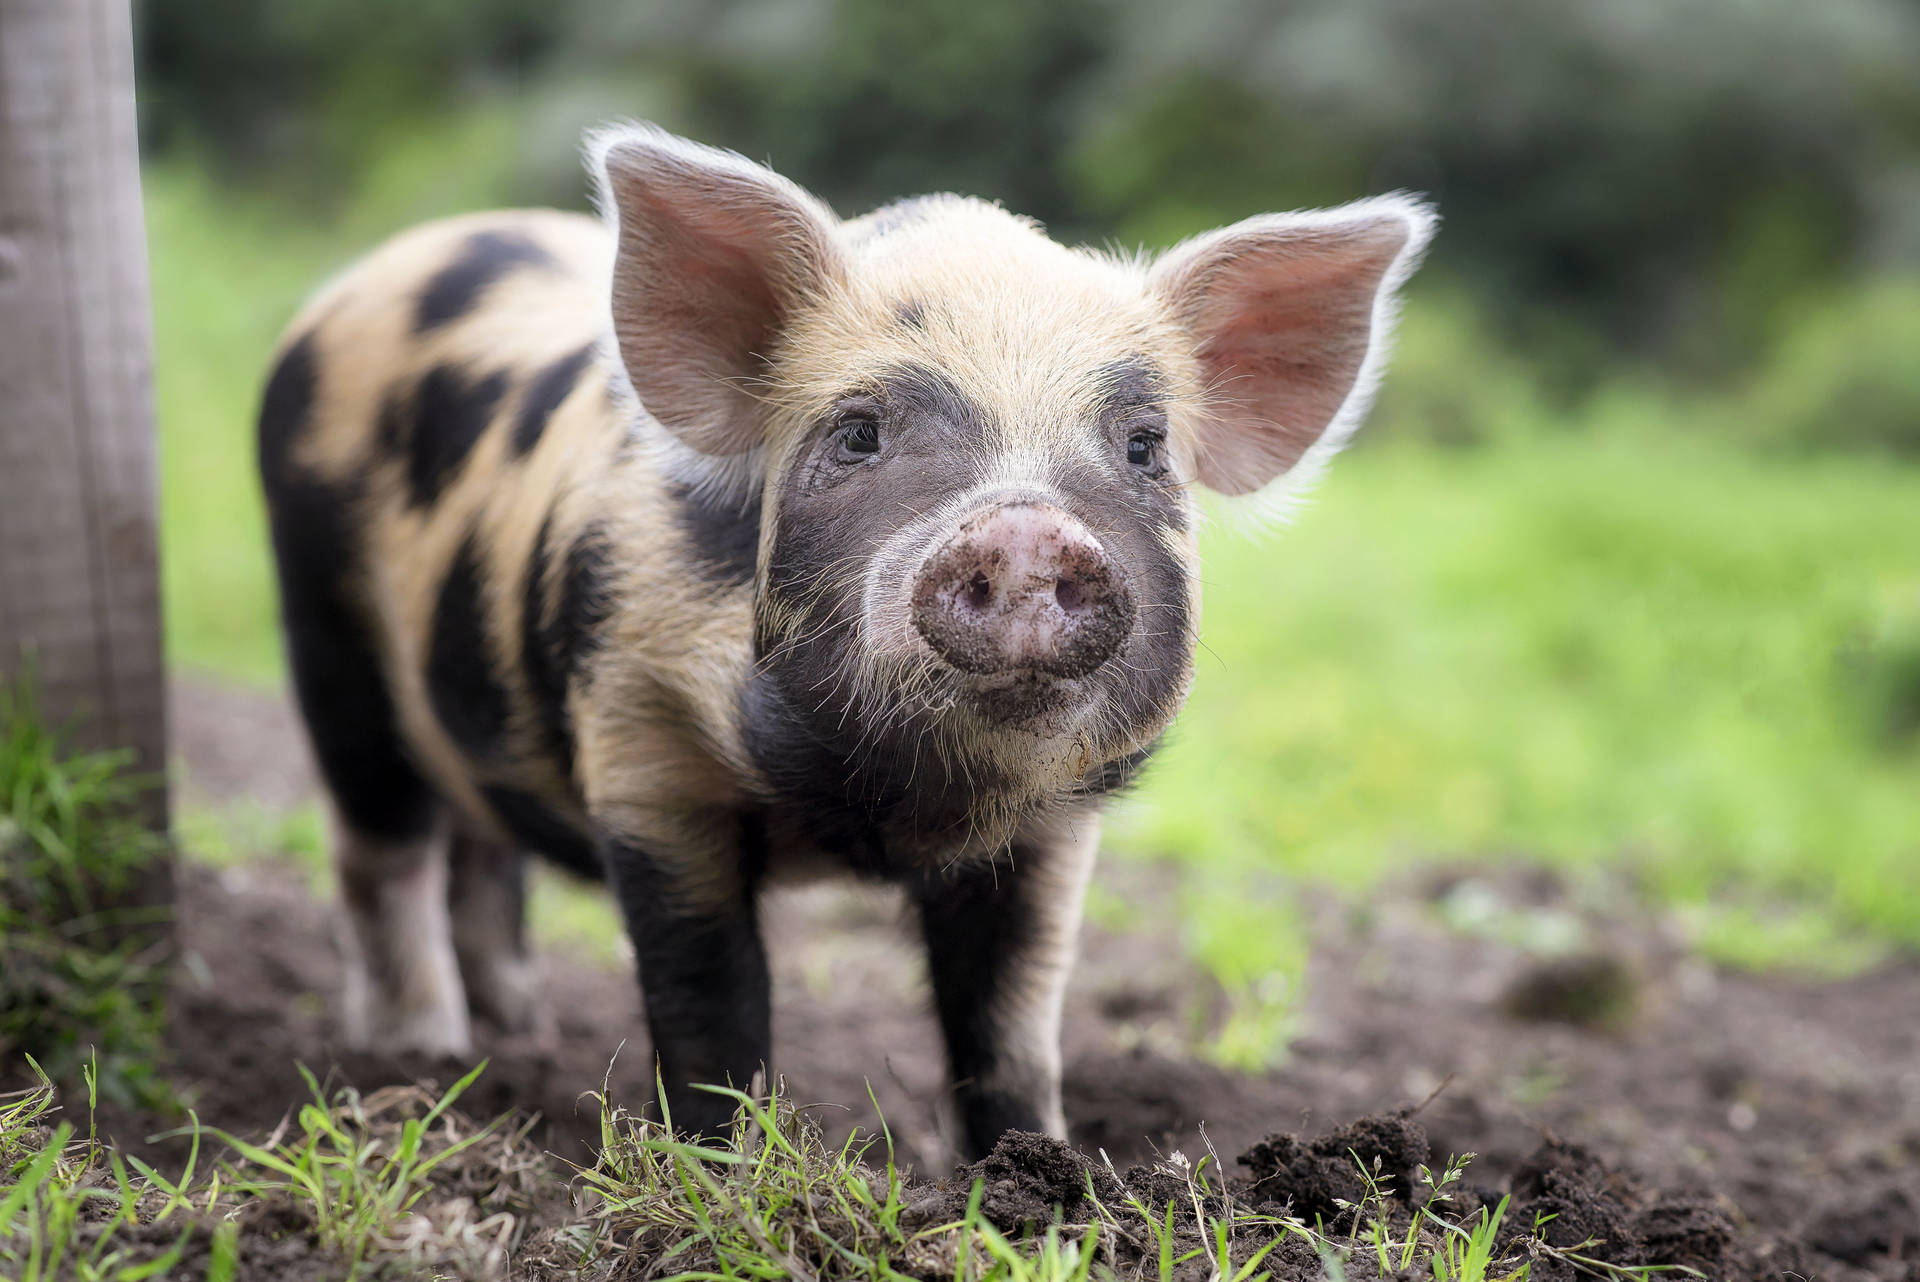 Pig In Mud Close-Up Wallpaper